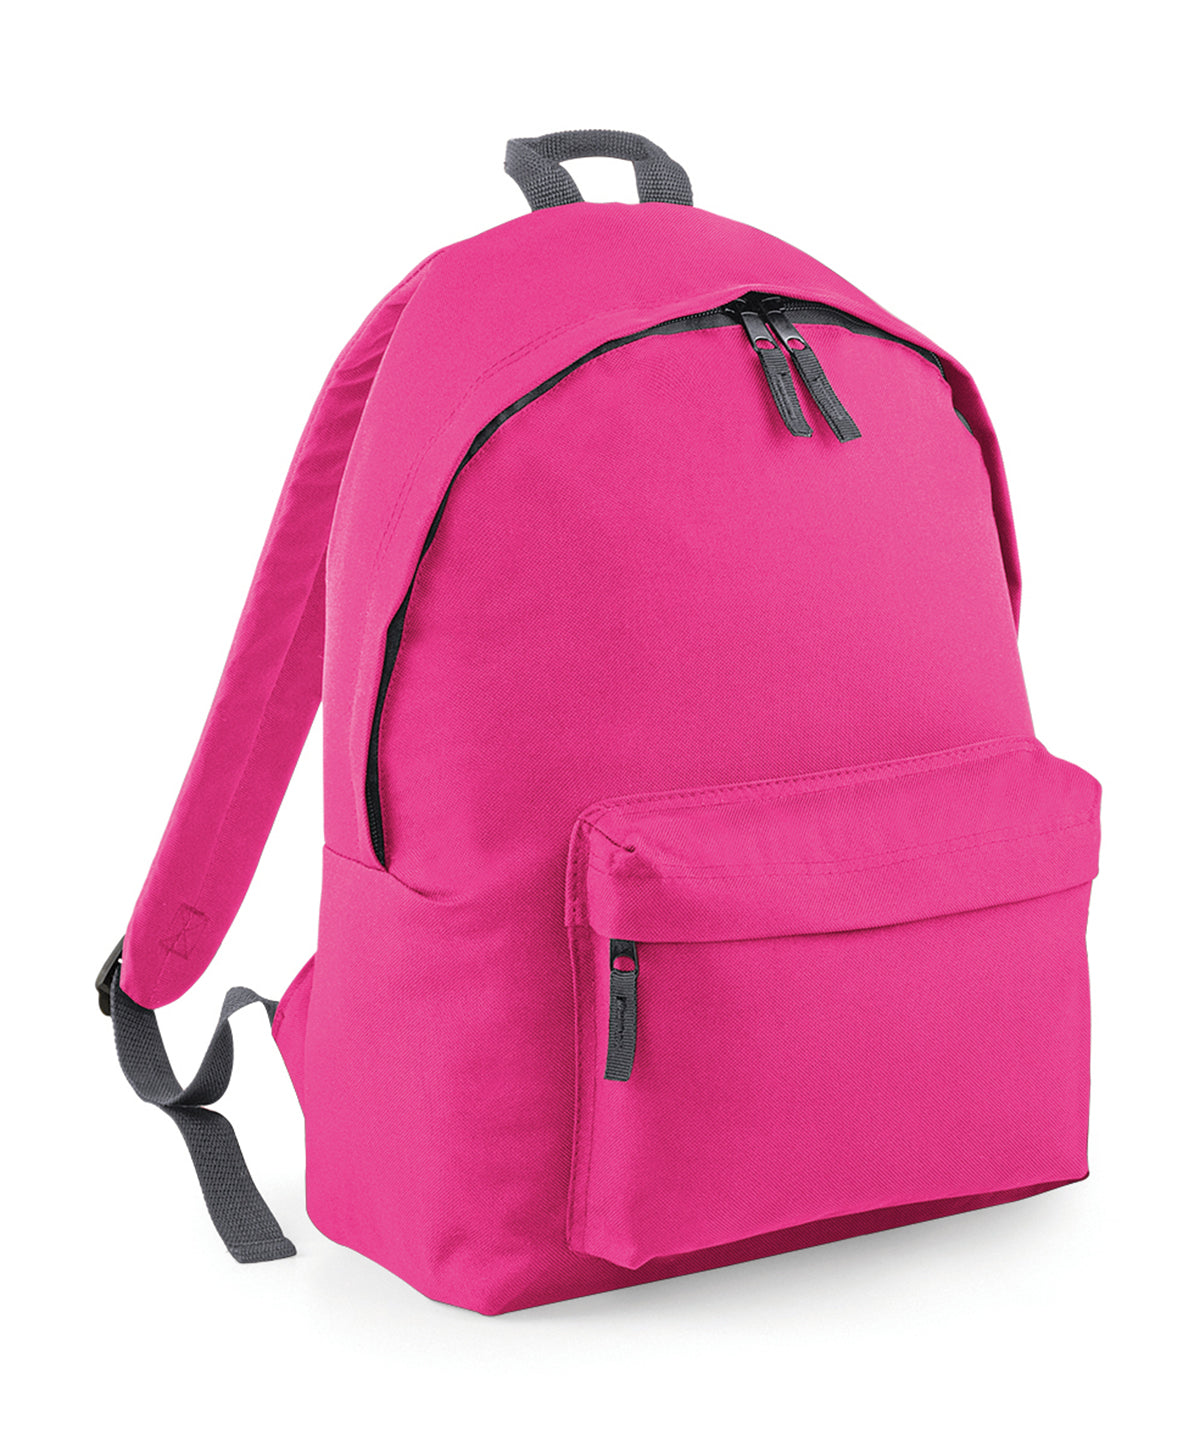 Personalised Bags - Fuchsia Bagbase Original fashion backpack